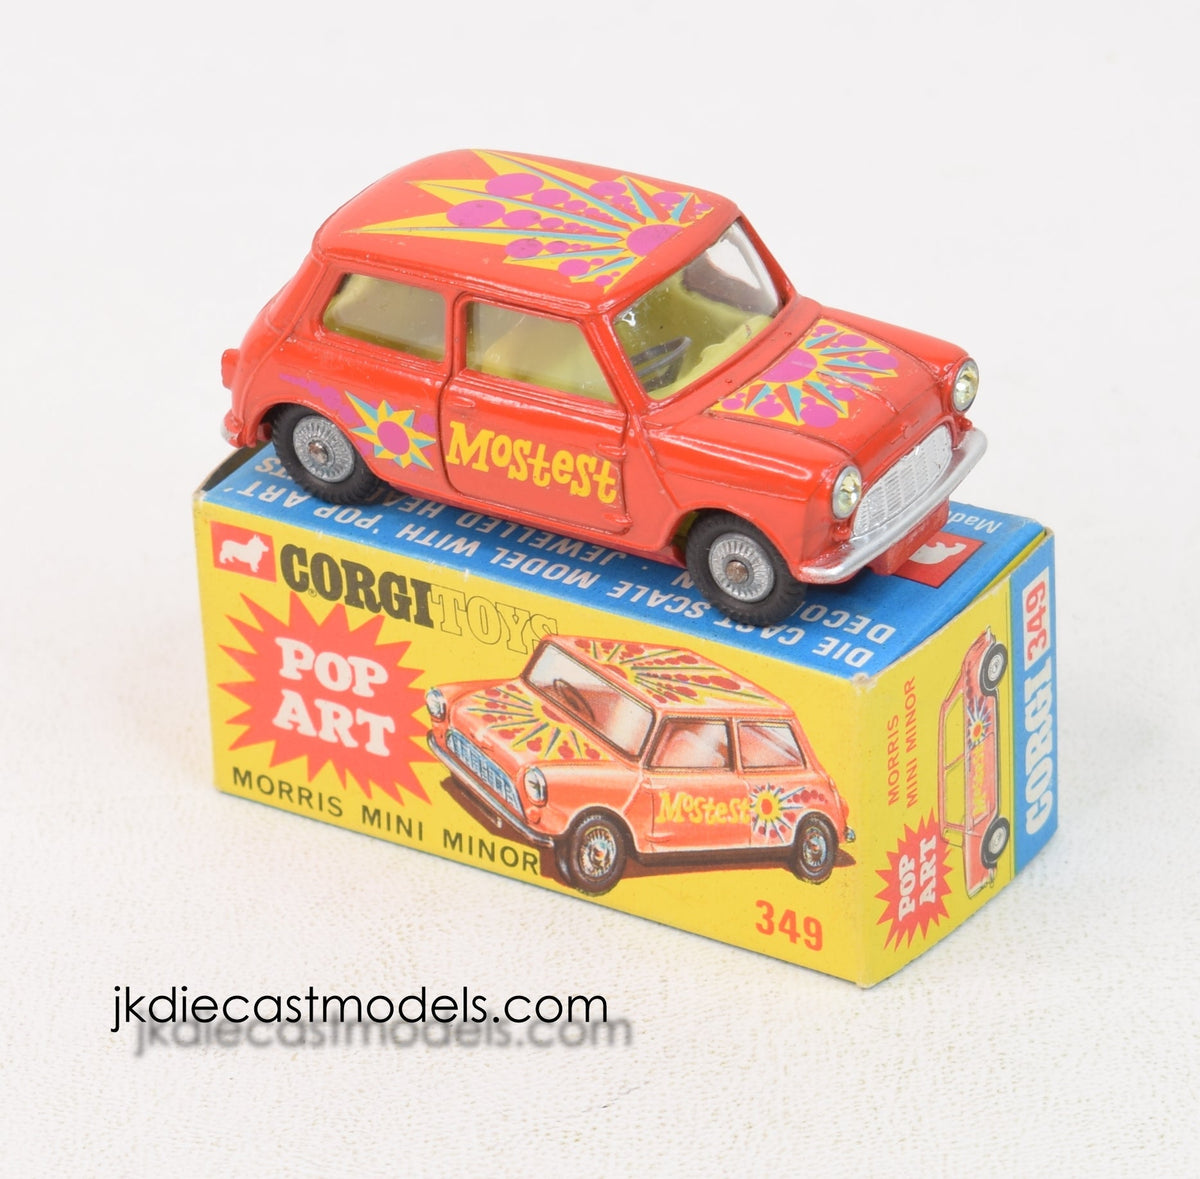 Corgi toys 349 'Pop Art' Mini Mint/Lovely box 'Kensington' Collection